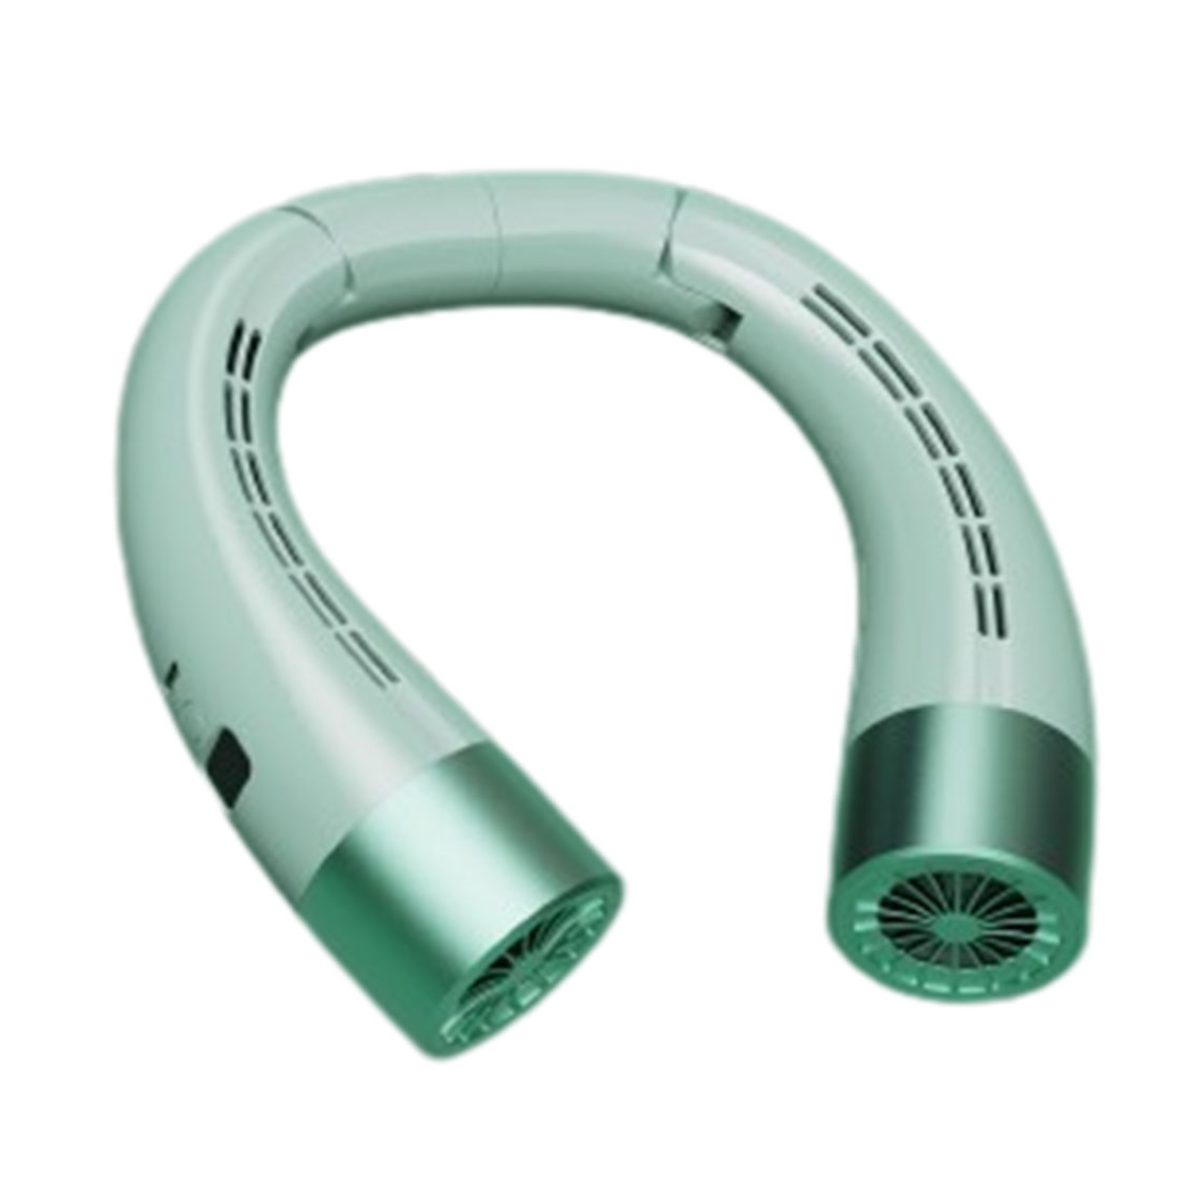 Hals Zusammenklappbar, UWOT Ventilator geräuscharm&langlebig，Grün Grün sicher&einstellbar, Mini den Fan-Um hängend: